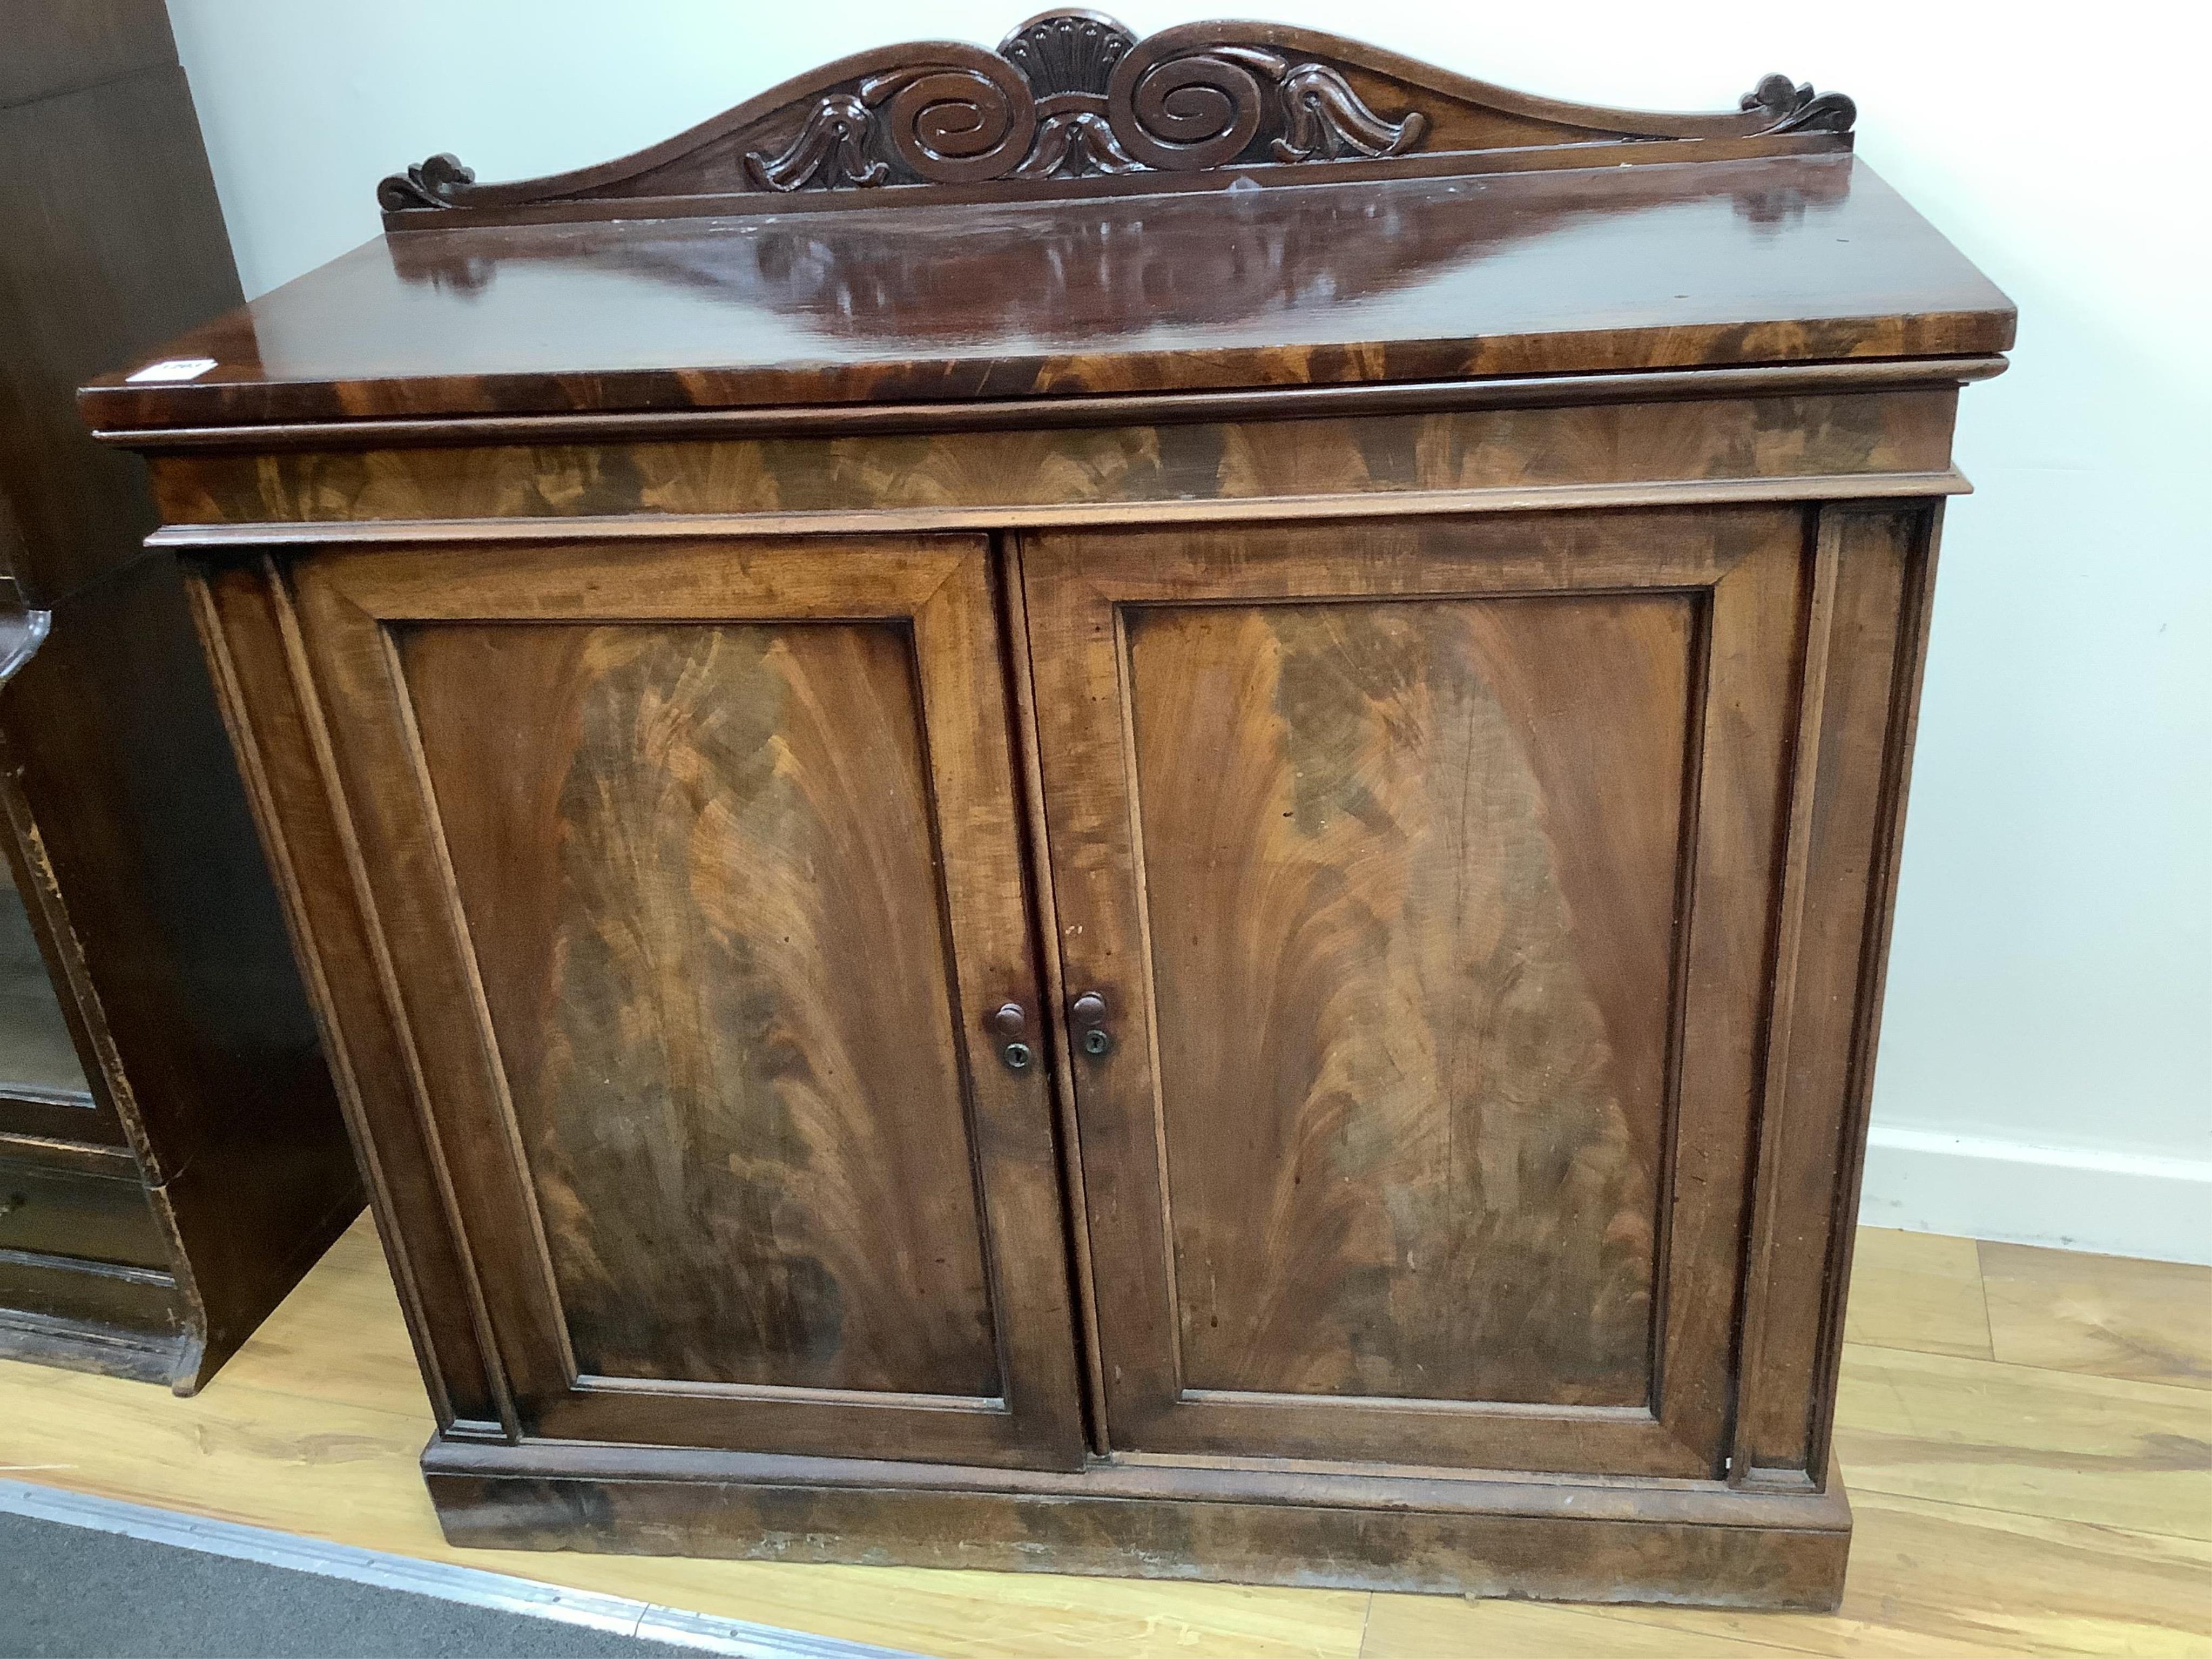 A William IV mahogany side cabinet, width 107cm, depth 43cm, height 106cm. Condition - fair